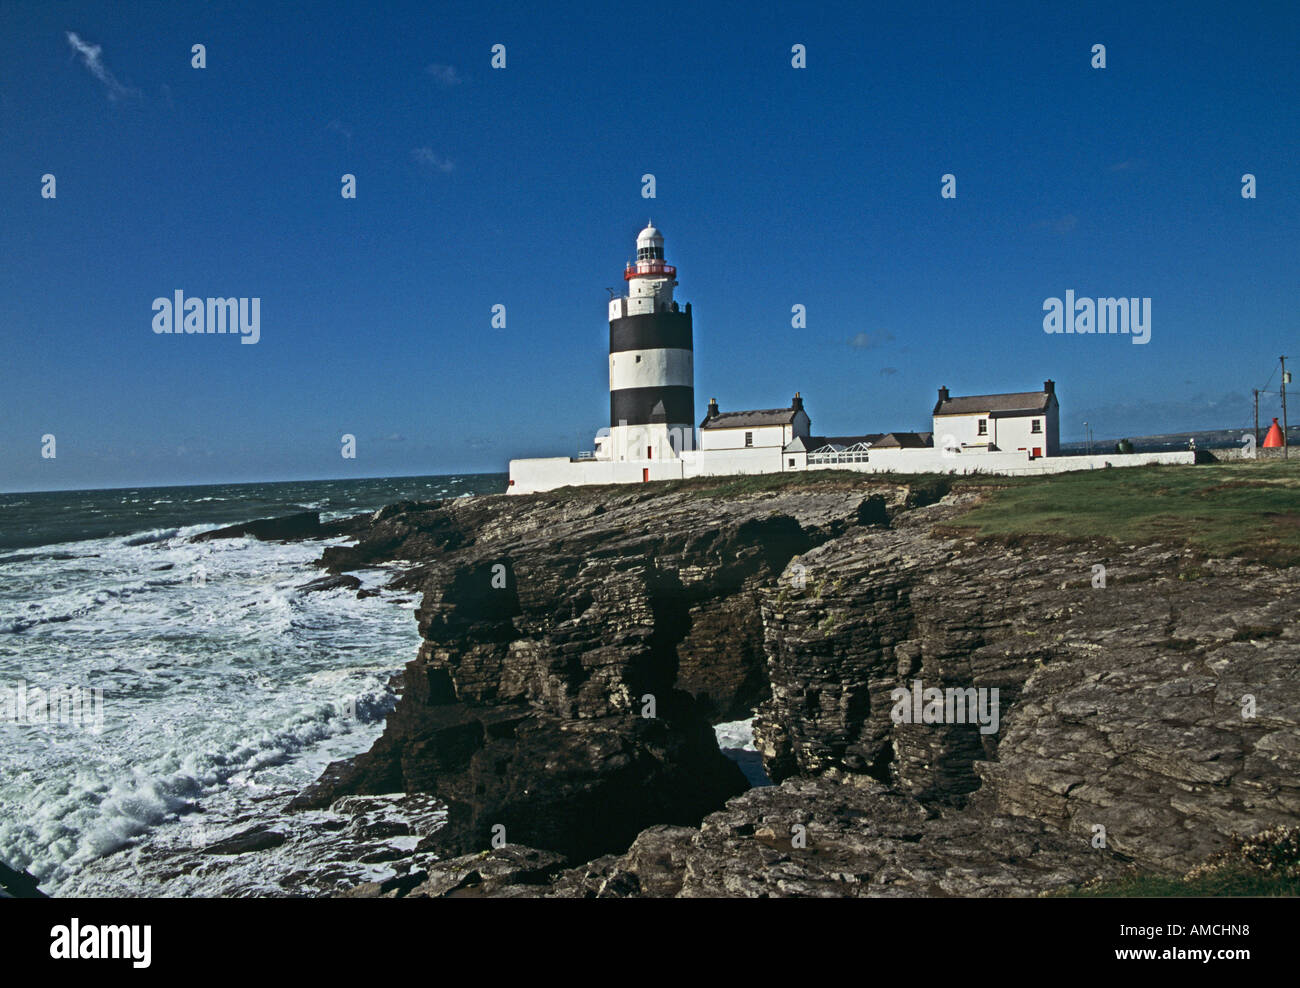 HOOK Halbinsel CO WEXFORD REPUBLIC OF Irland EU Oktober Hook Lighthouse die älteste in Großbritannien und Irland Stockfoto